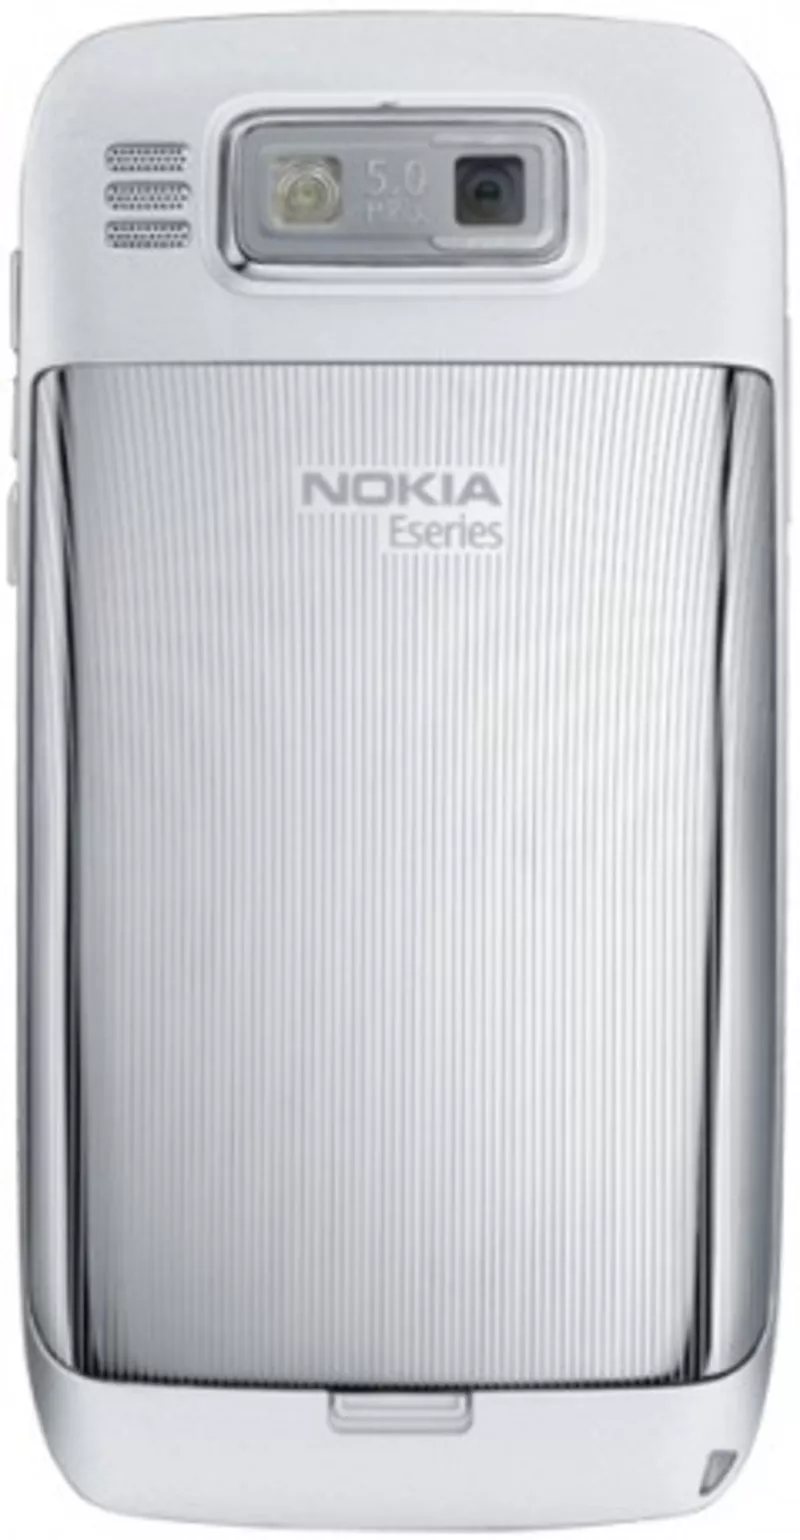 Nokia E72 Zircon White navi 2